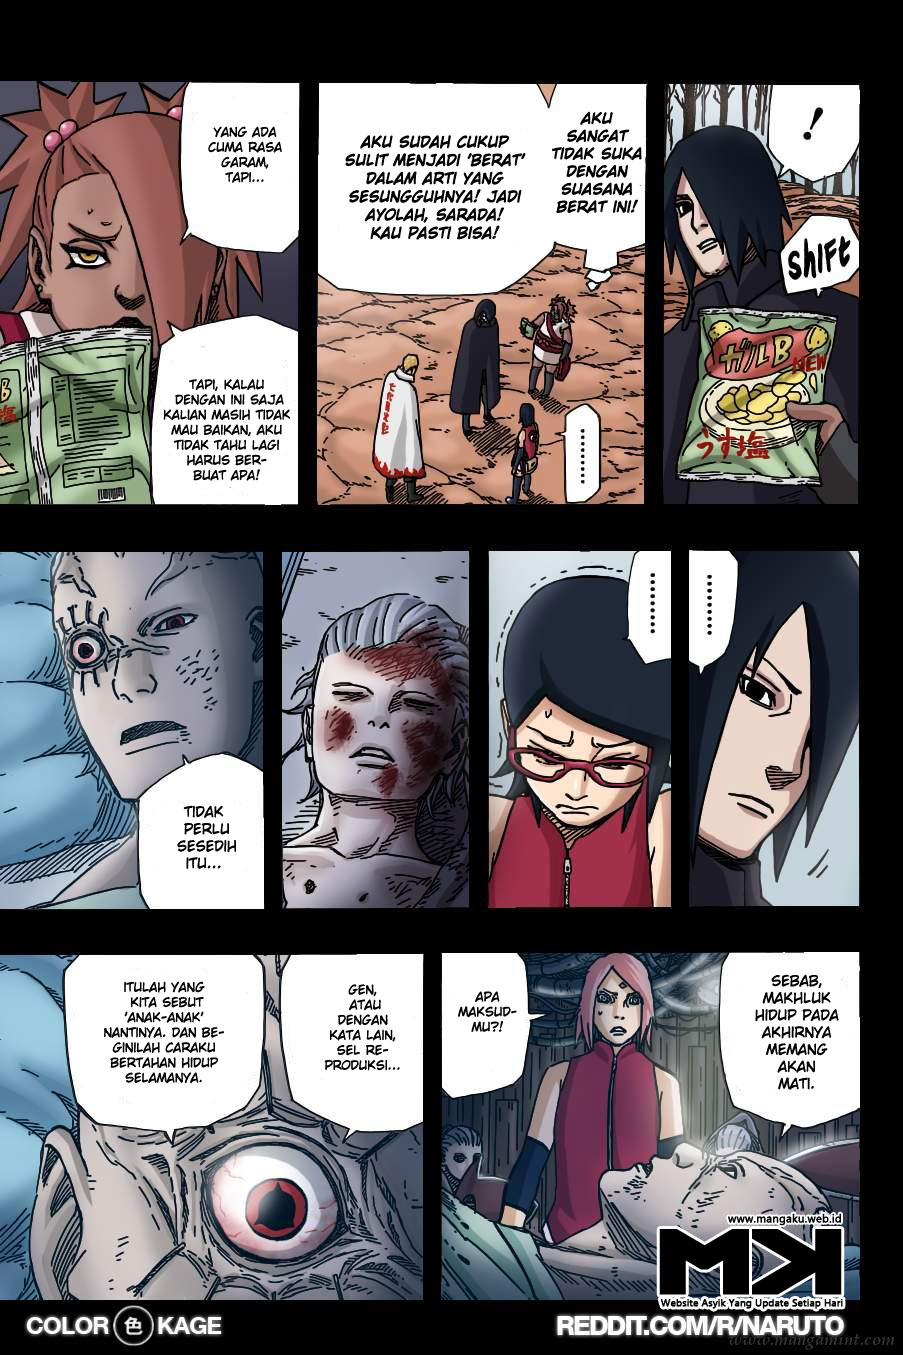 Kumpulan Manga Naruto Full Colour Manga Naruto shippuden 